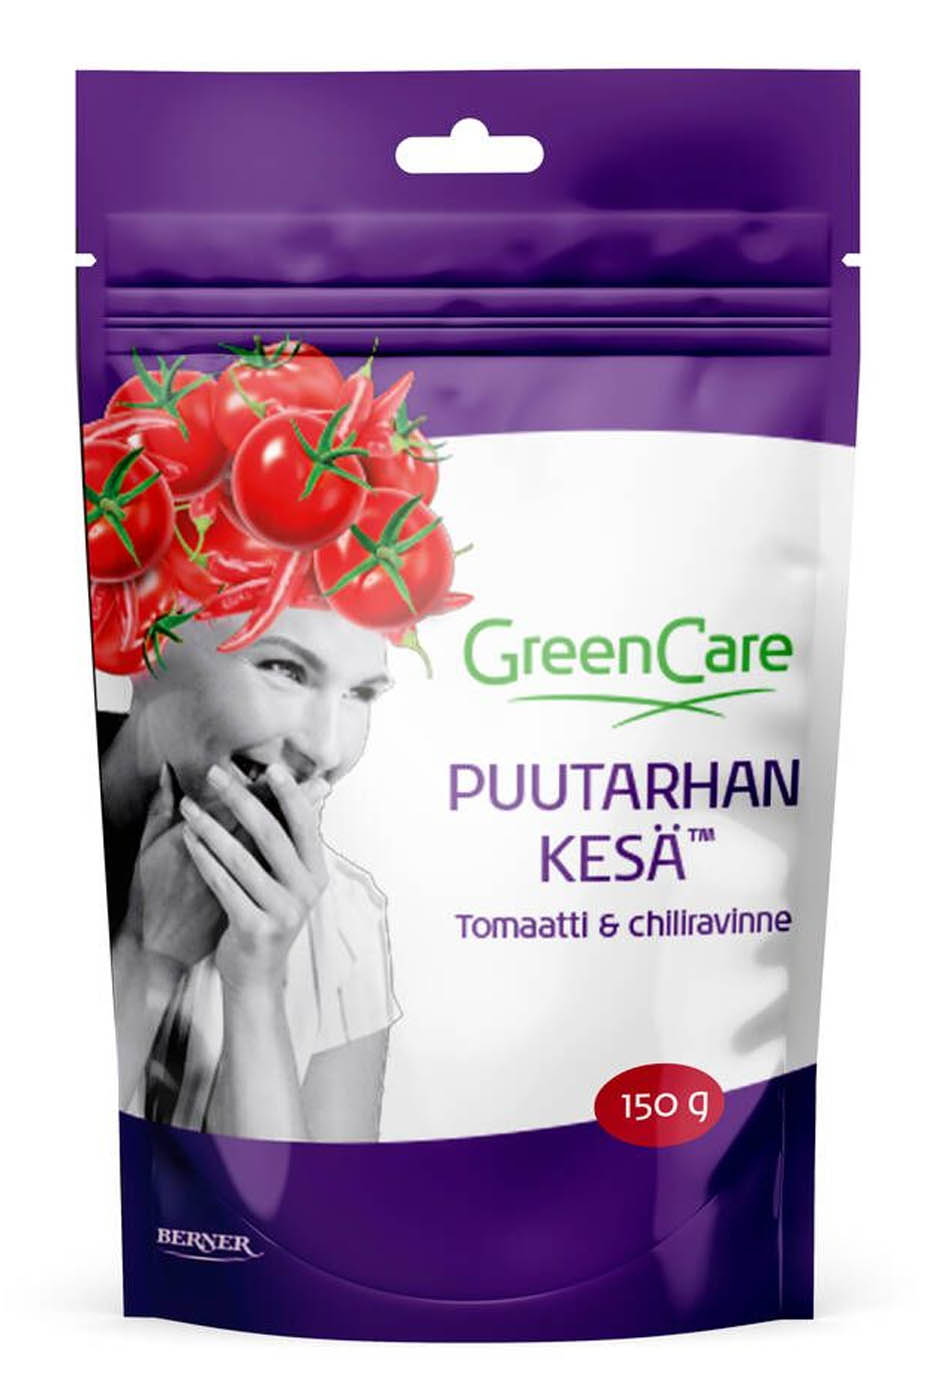 Green Care Tuuthartan Kesä tomato and chili nutrient 150g